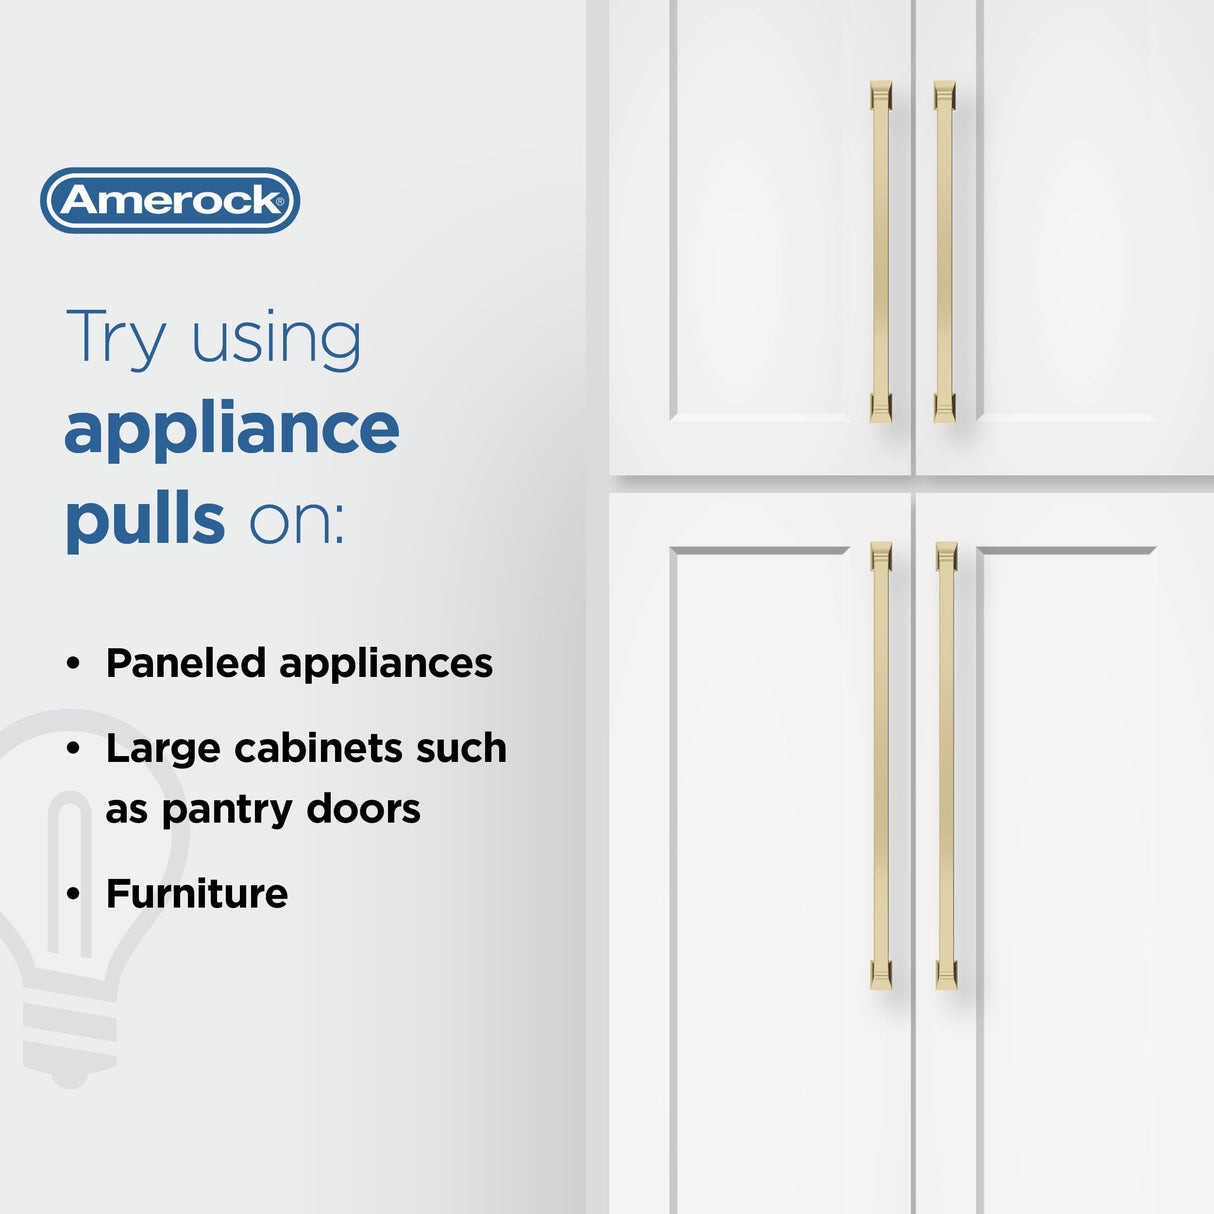 Amerock Appliance Pull Black Bronze 18 inch (457 mm) Center to Center Bar Pulls 1 Pack Drawer Pull Drawer Handle Cabinet Hardware